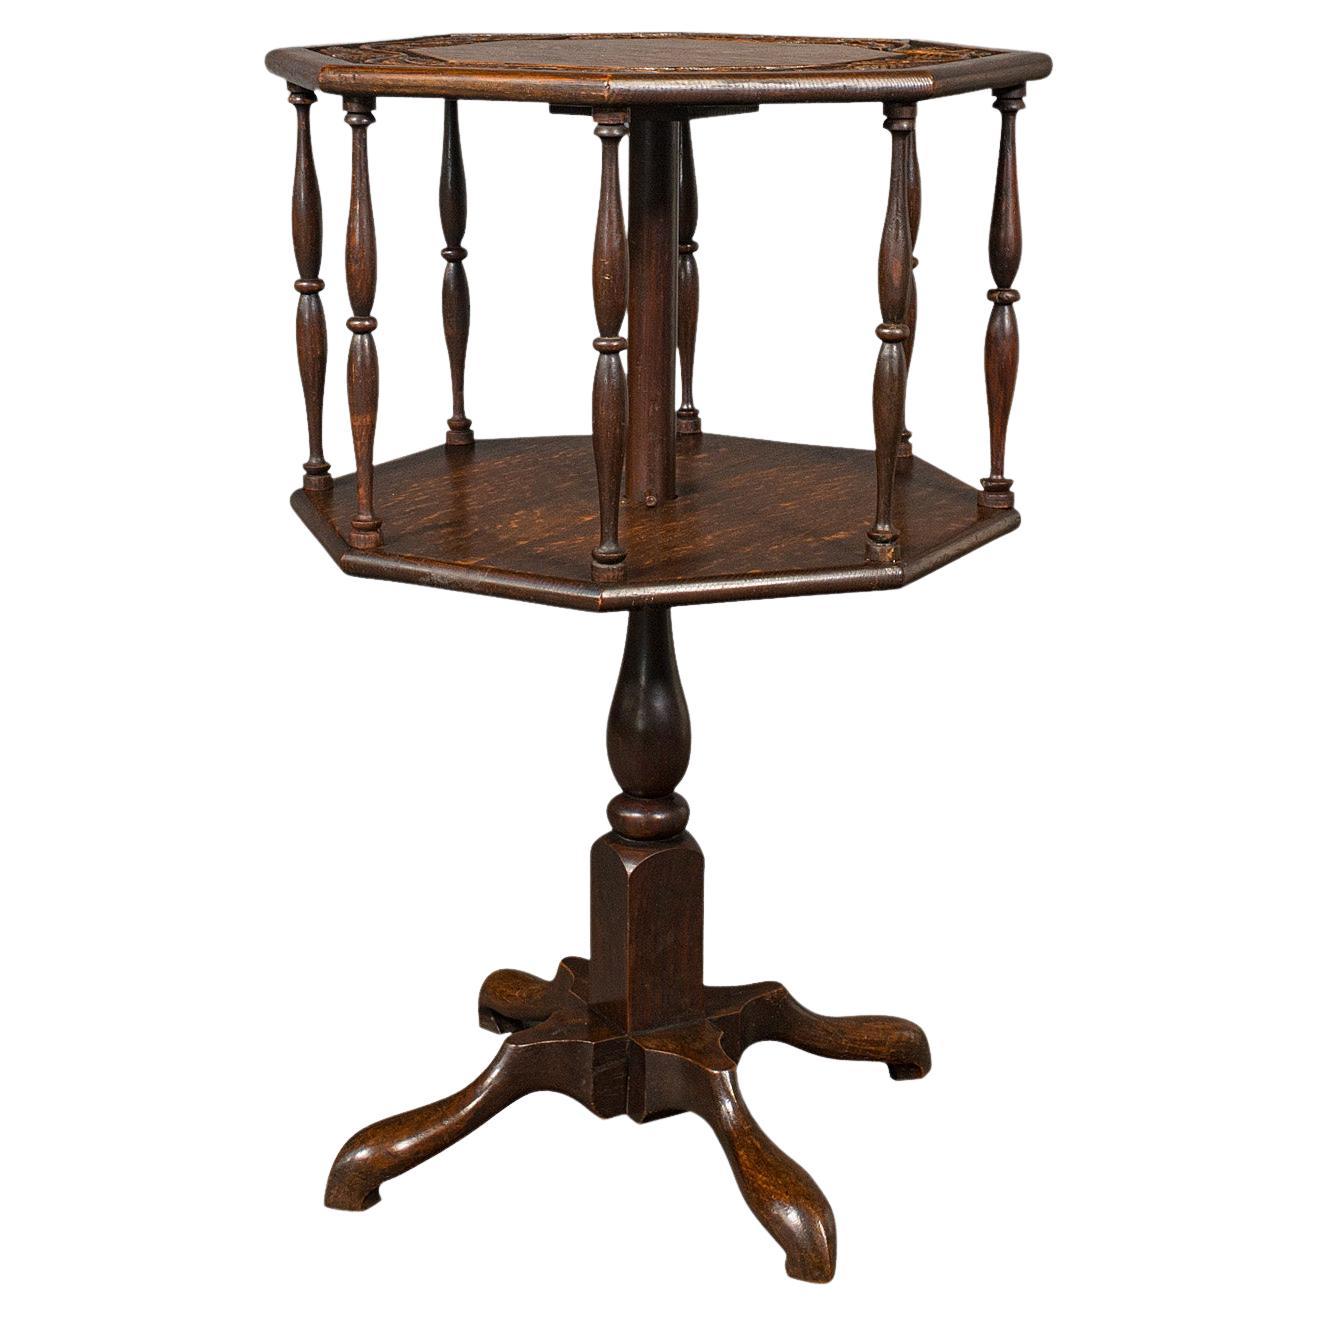 Antique Octagonal Occasional Table, Oak, Book Shelf, Arts & Crafts, Victorian